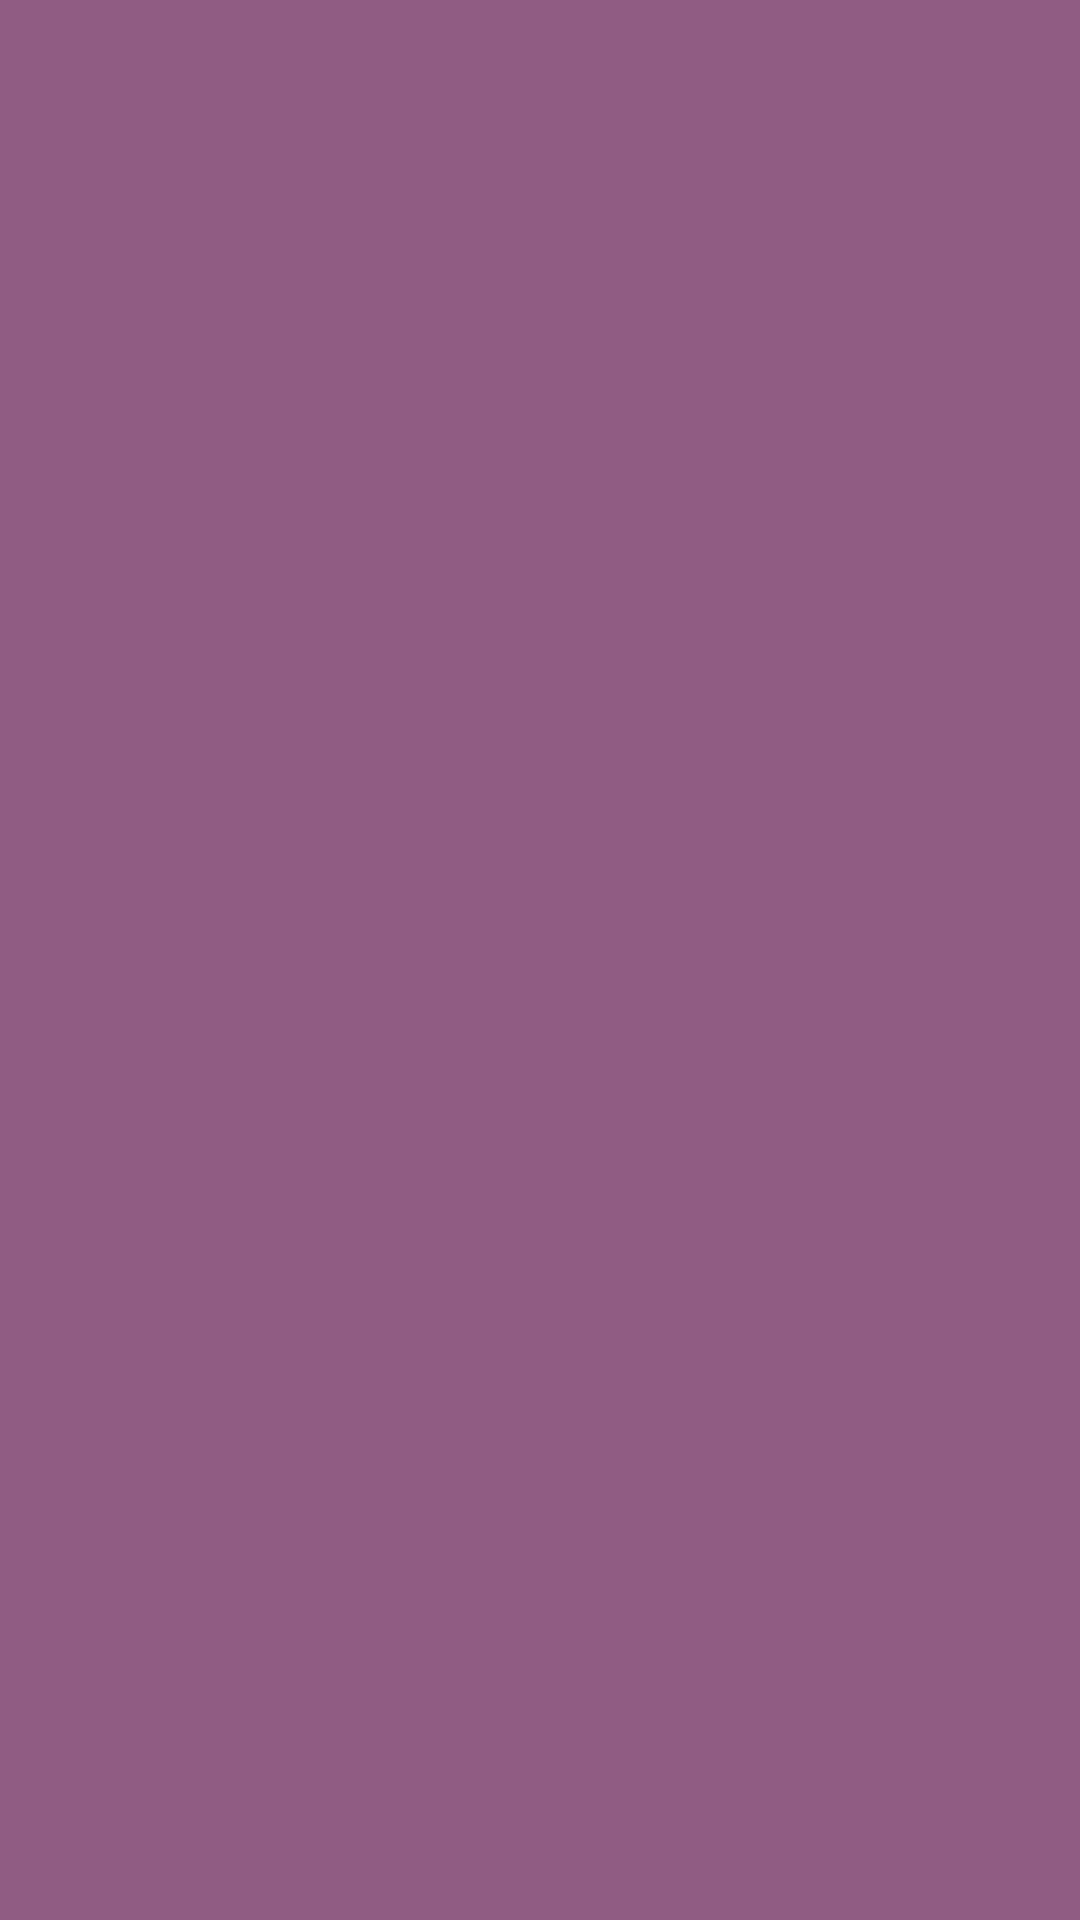 1080x1920 Antique Fuchsia Solid Color Background